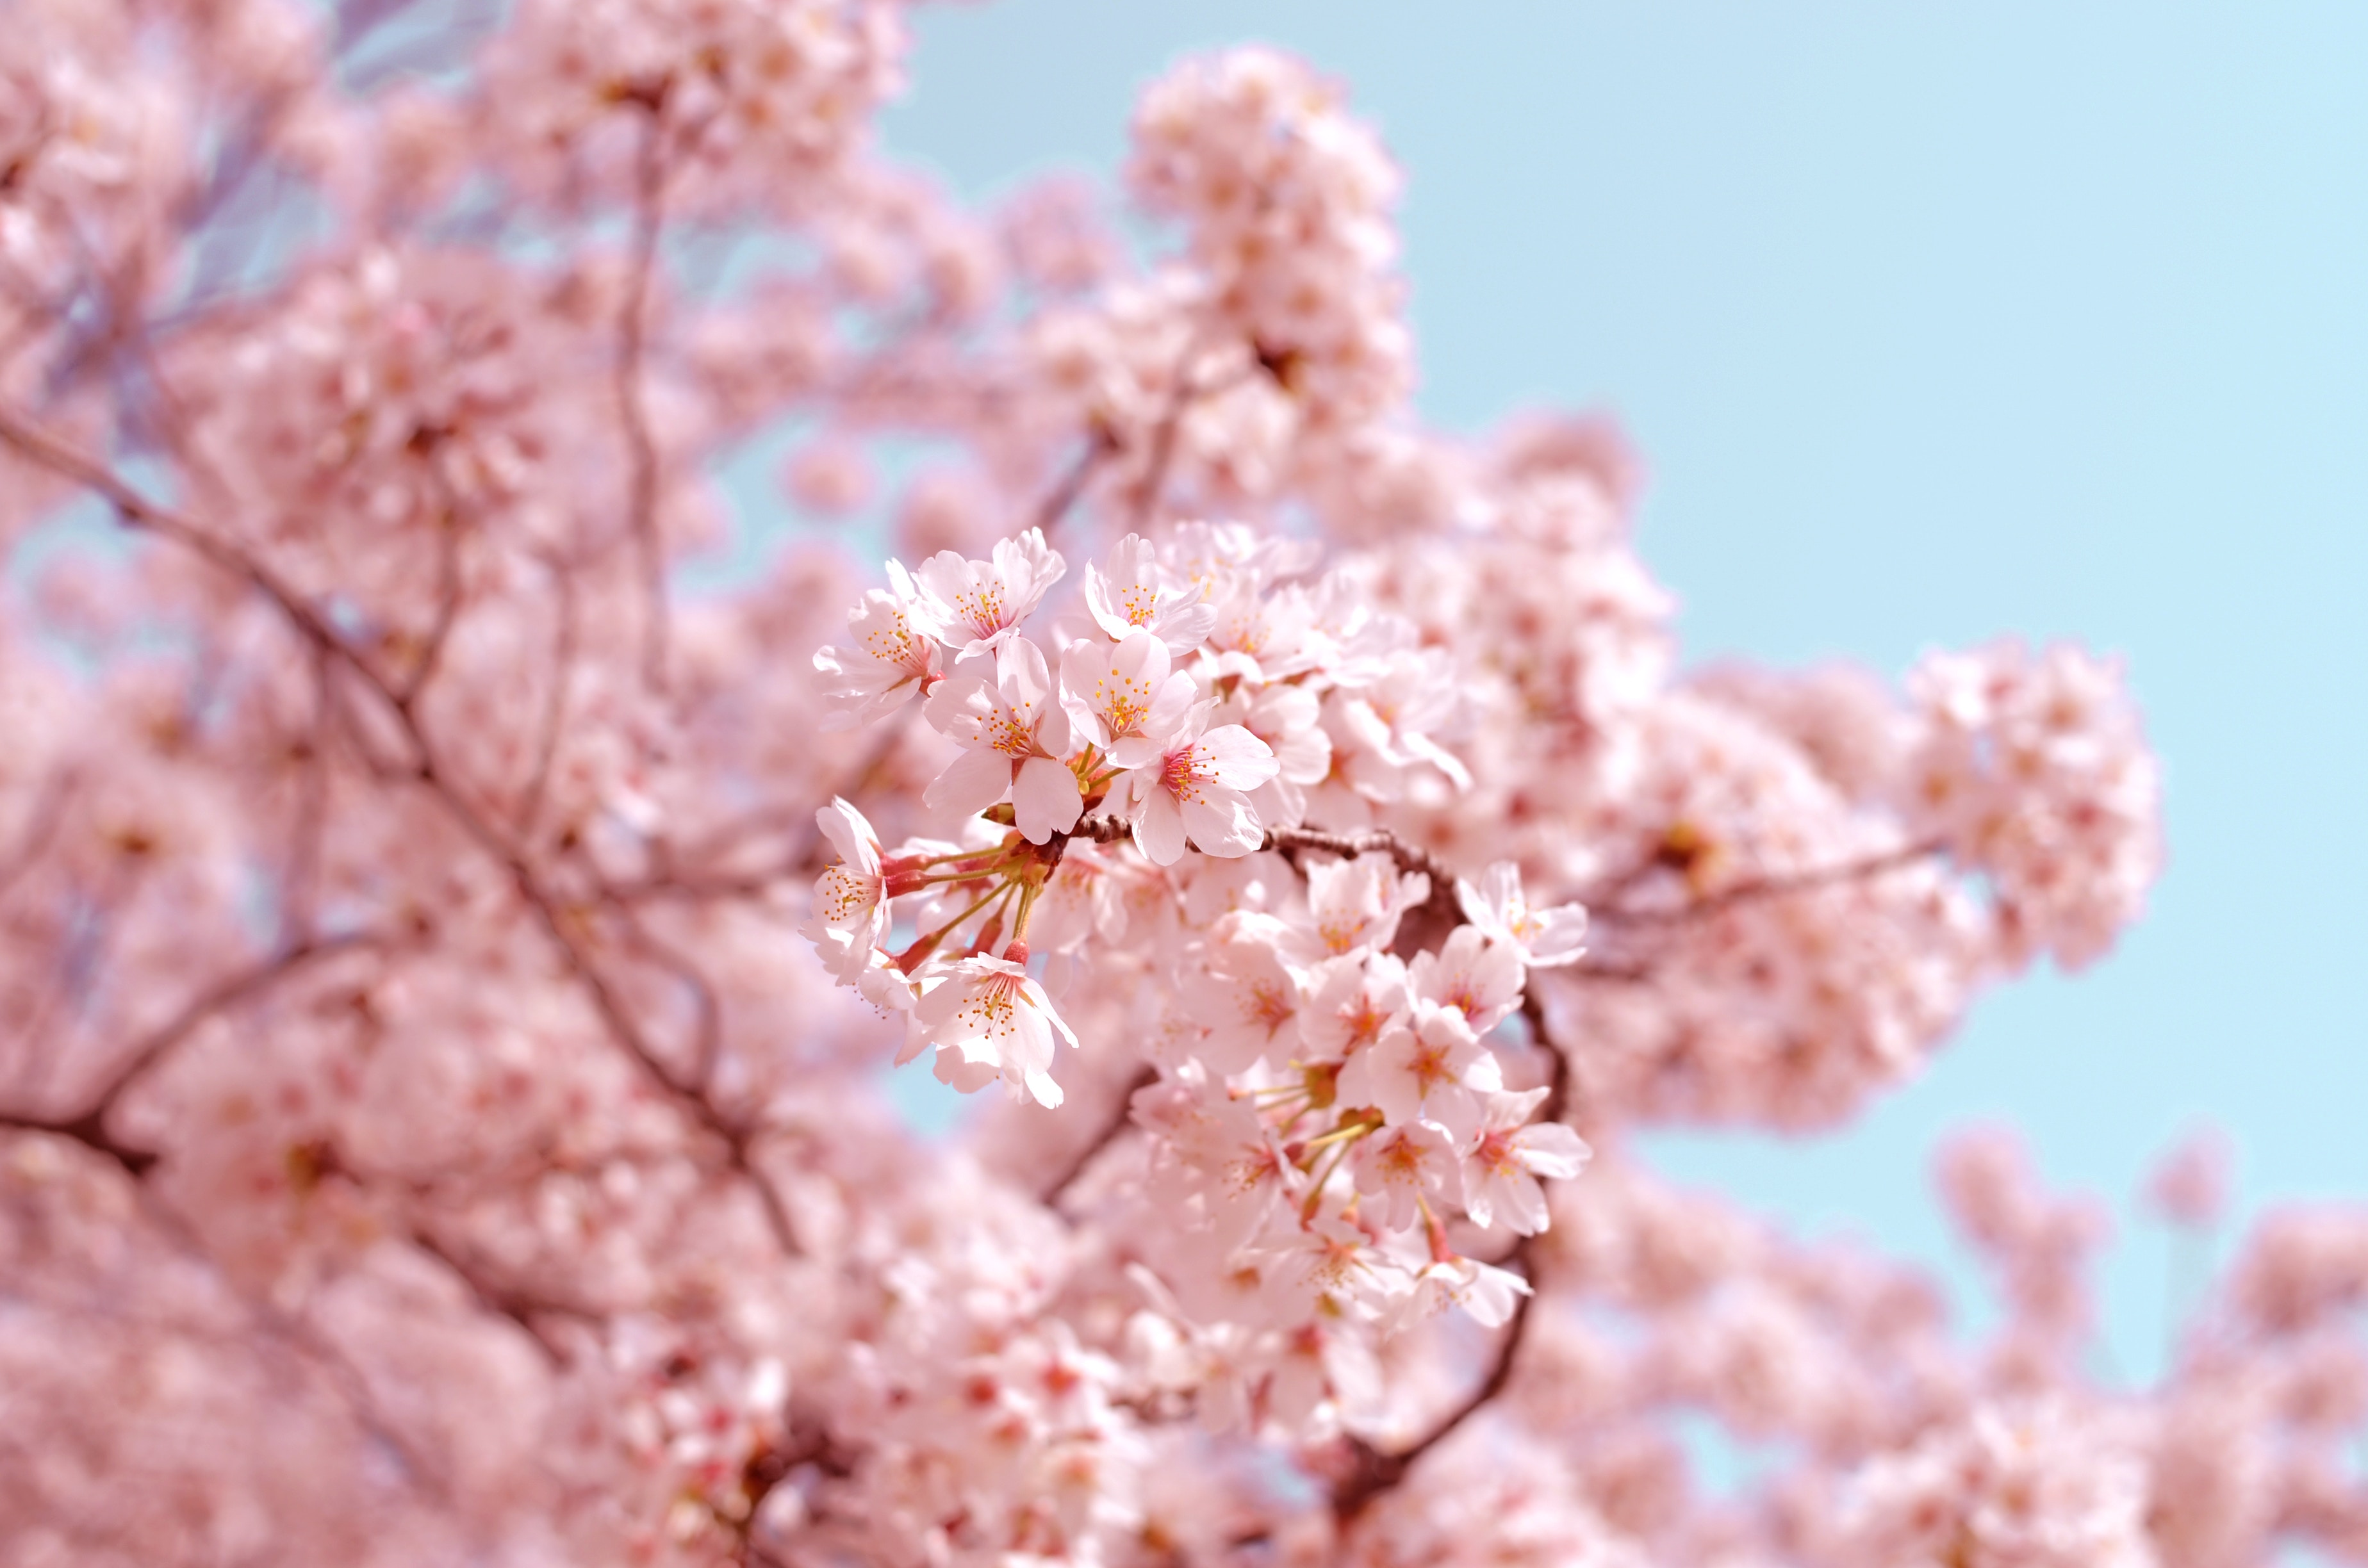 Japan's Cherry Blossom Economy